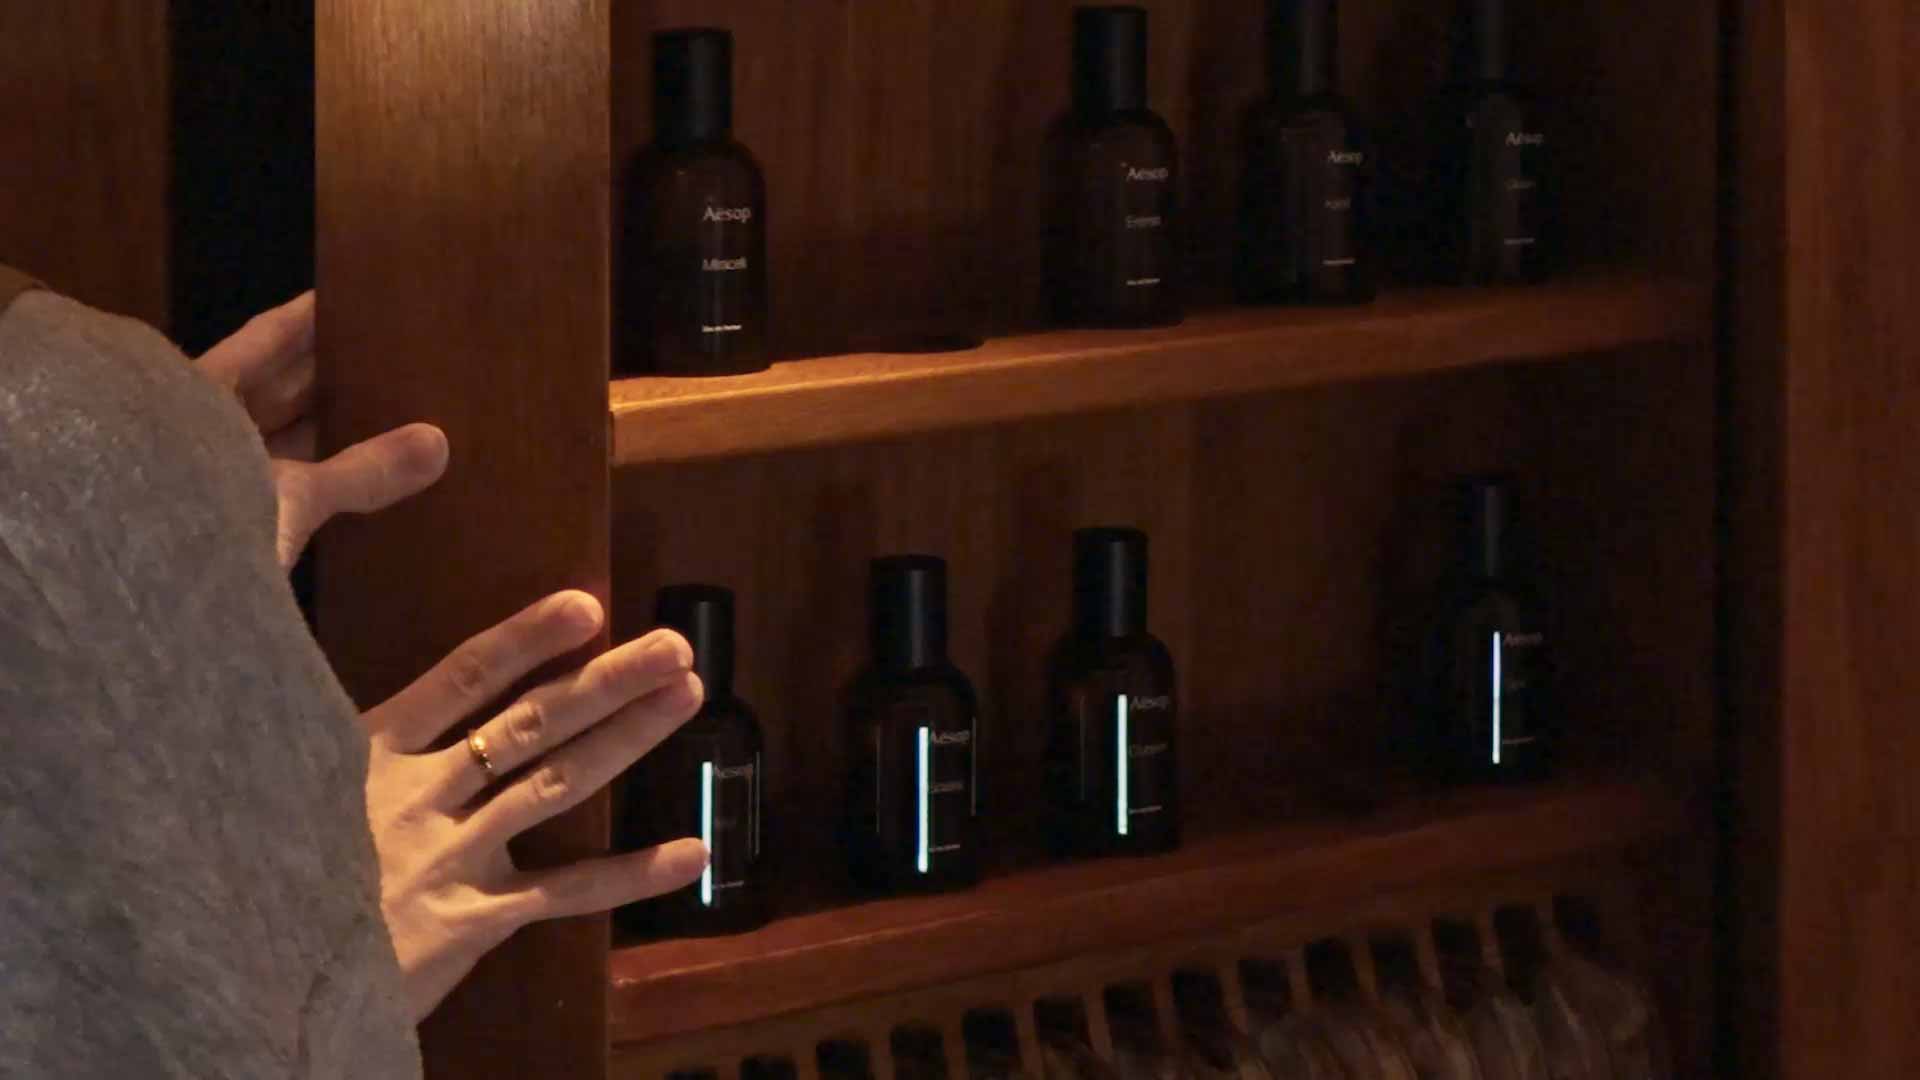 Hands holding a wooden shelve displaying Aesop fragrances